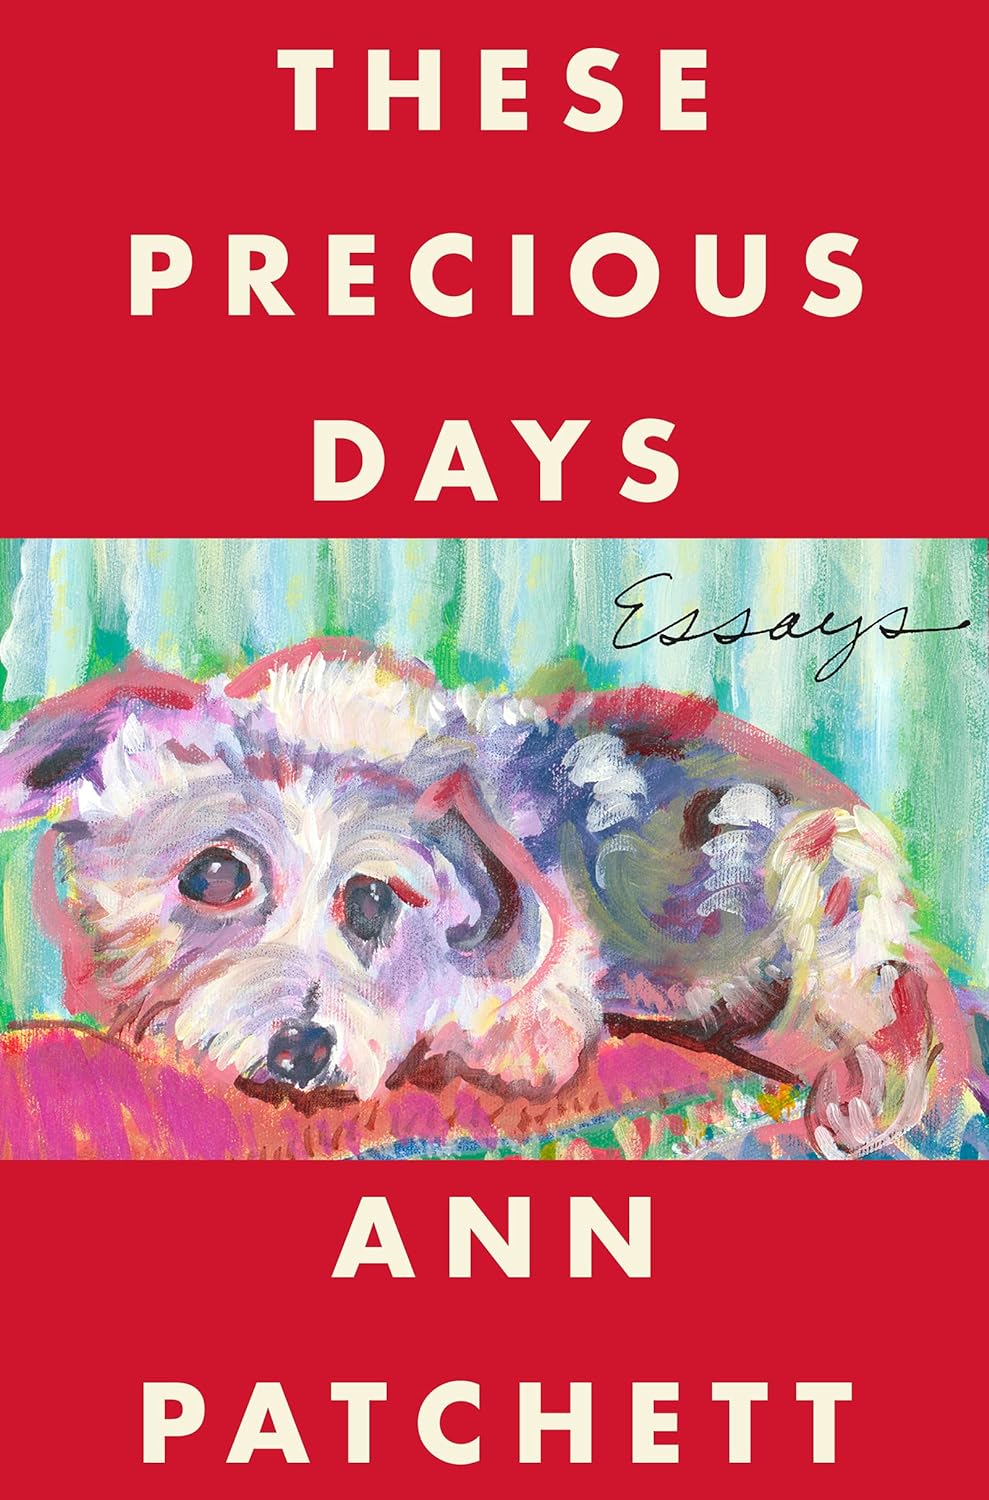 These Precious Days: Essays